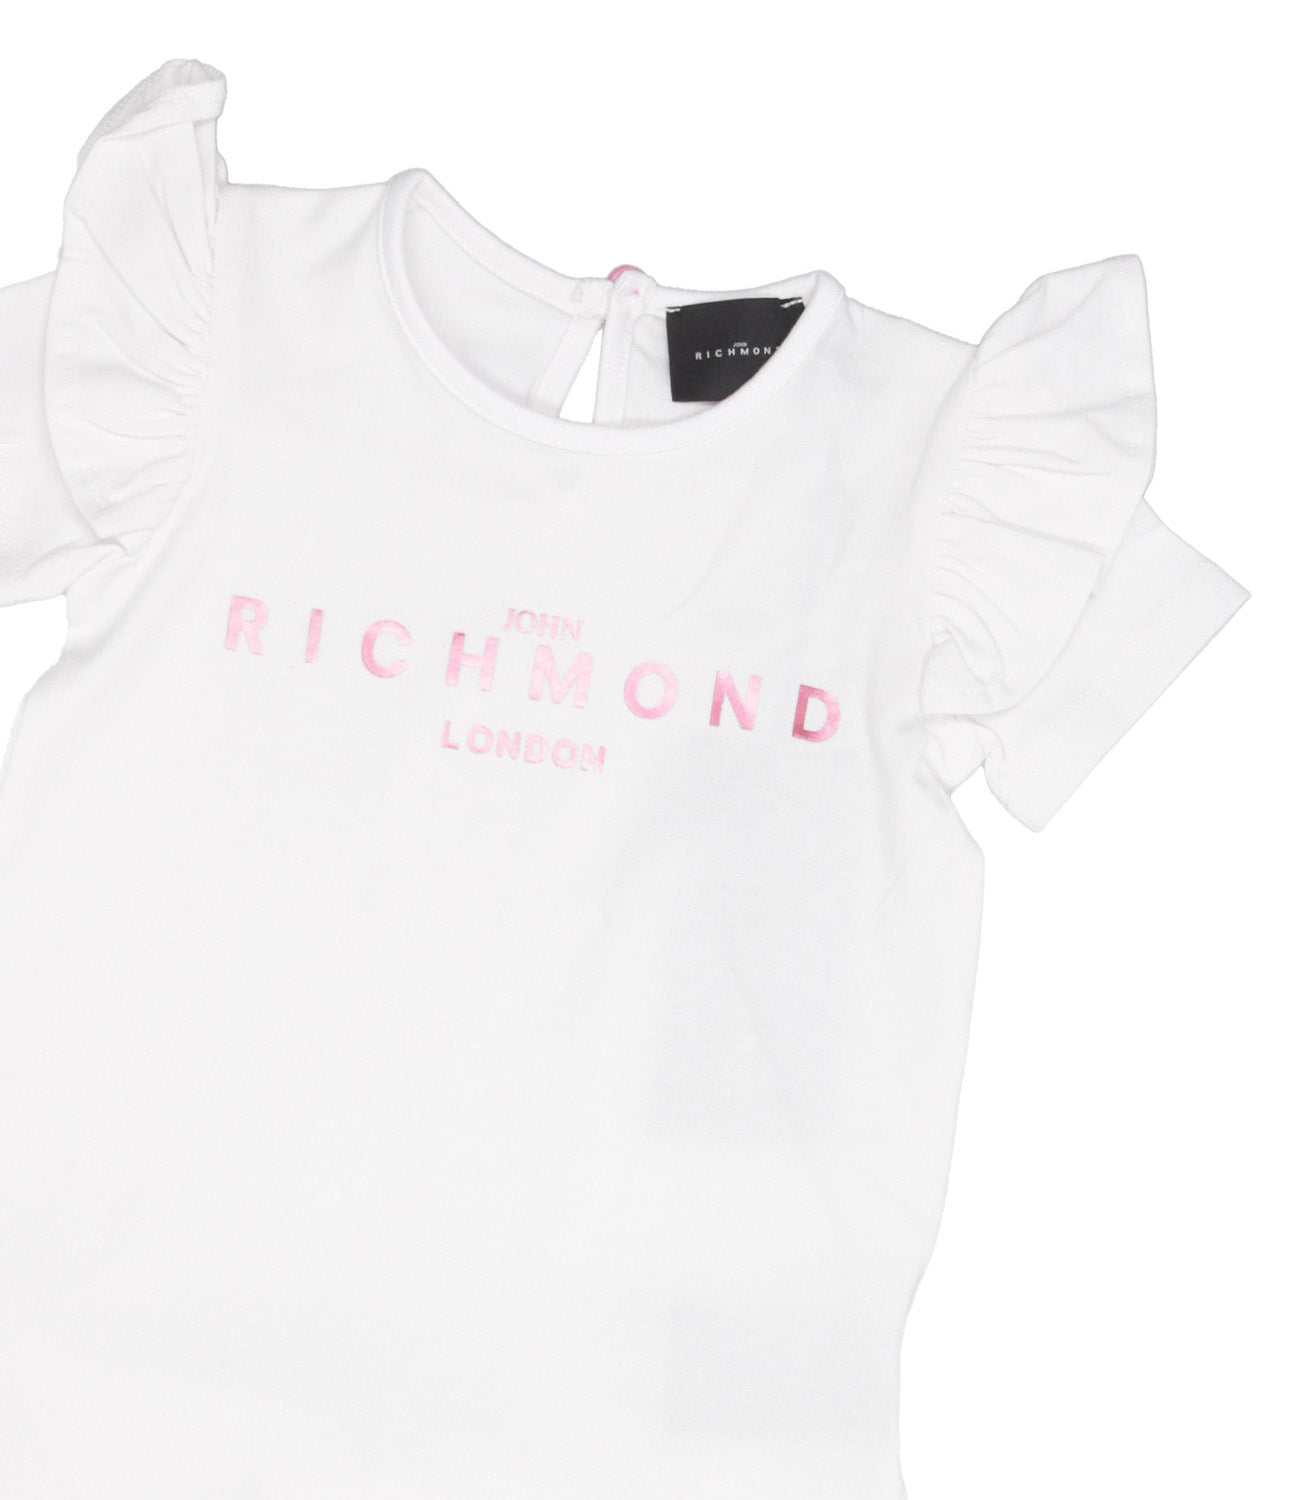 Richmond Kids | Zuke White and Yellow T-Shirt and Skirt Set